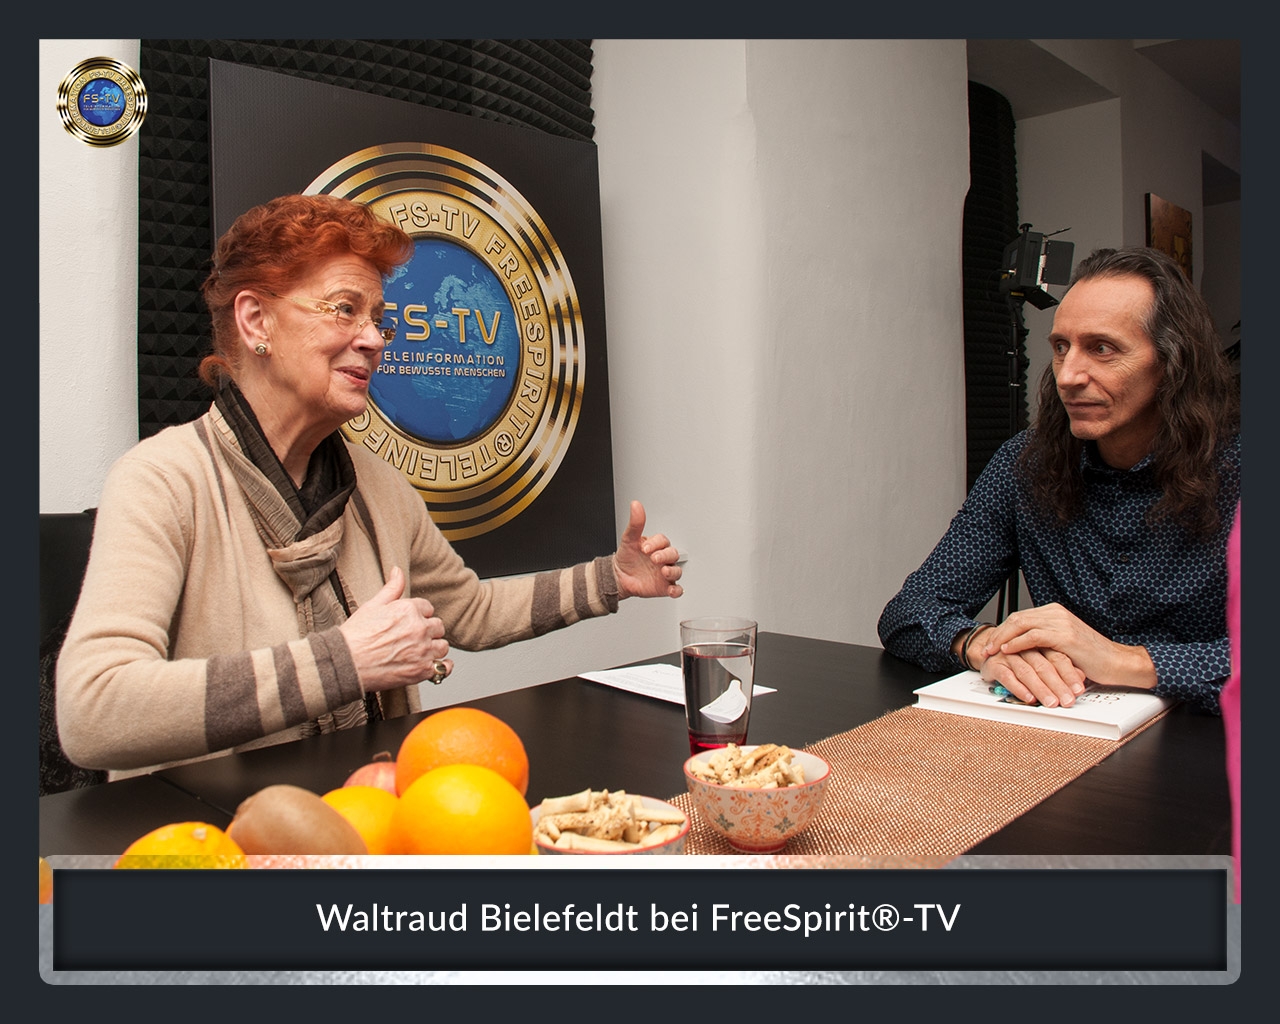 FS-TV-Bildergallerie-Waltraud-Bielefeldt-2